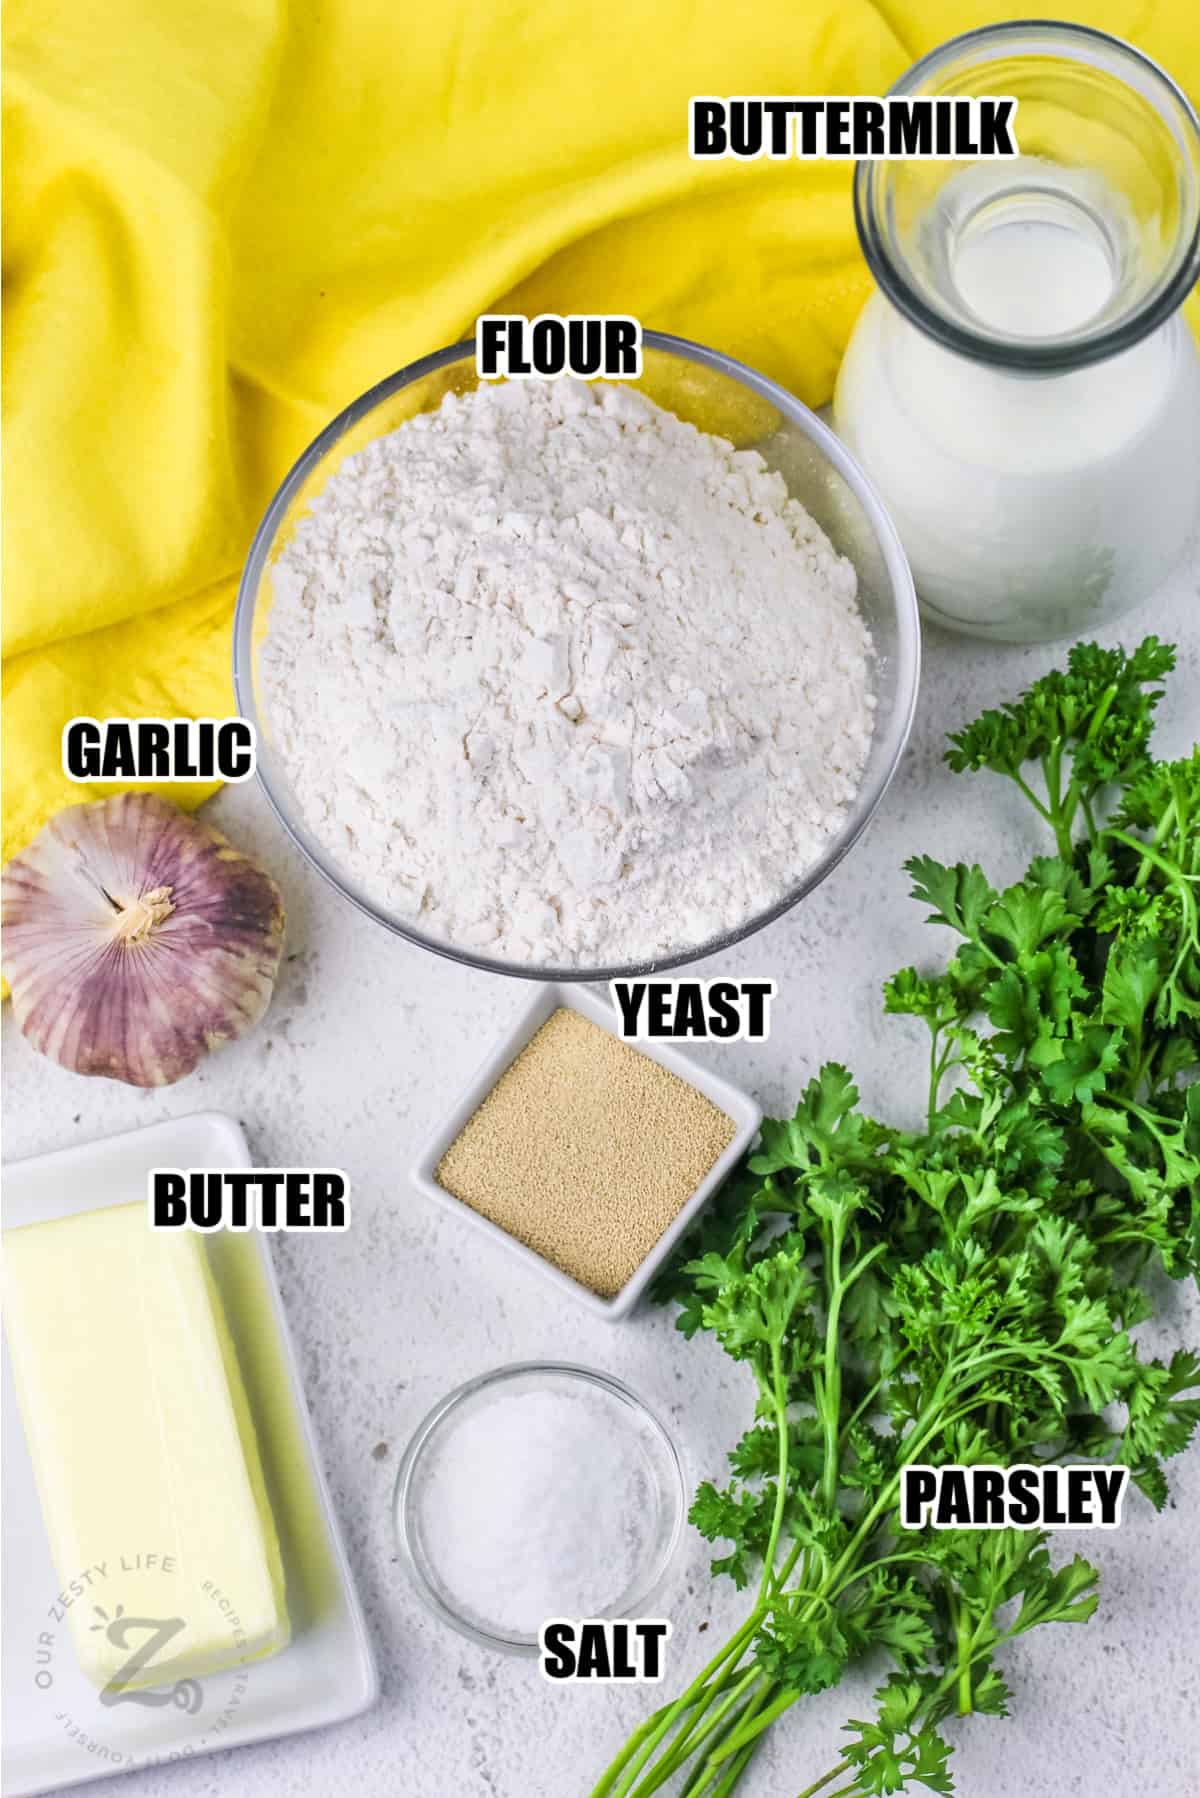 ingredients to make garlic herb bread including buttermilk, flour, garlic, yeast, butter, parsley, and salt